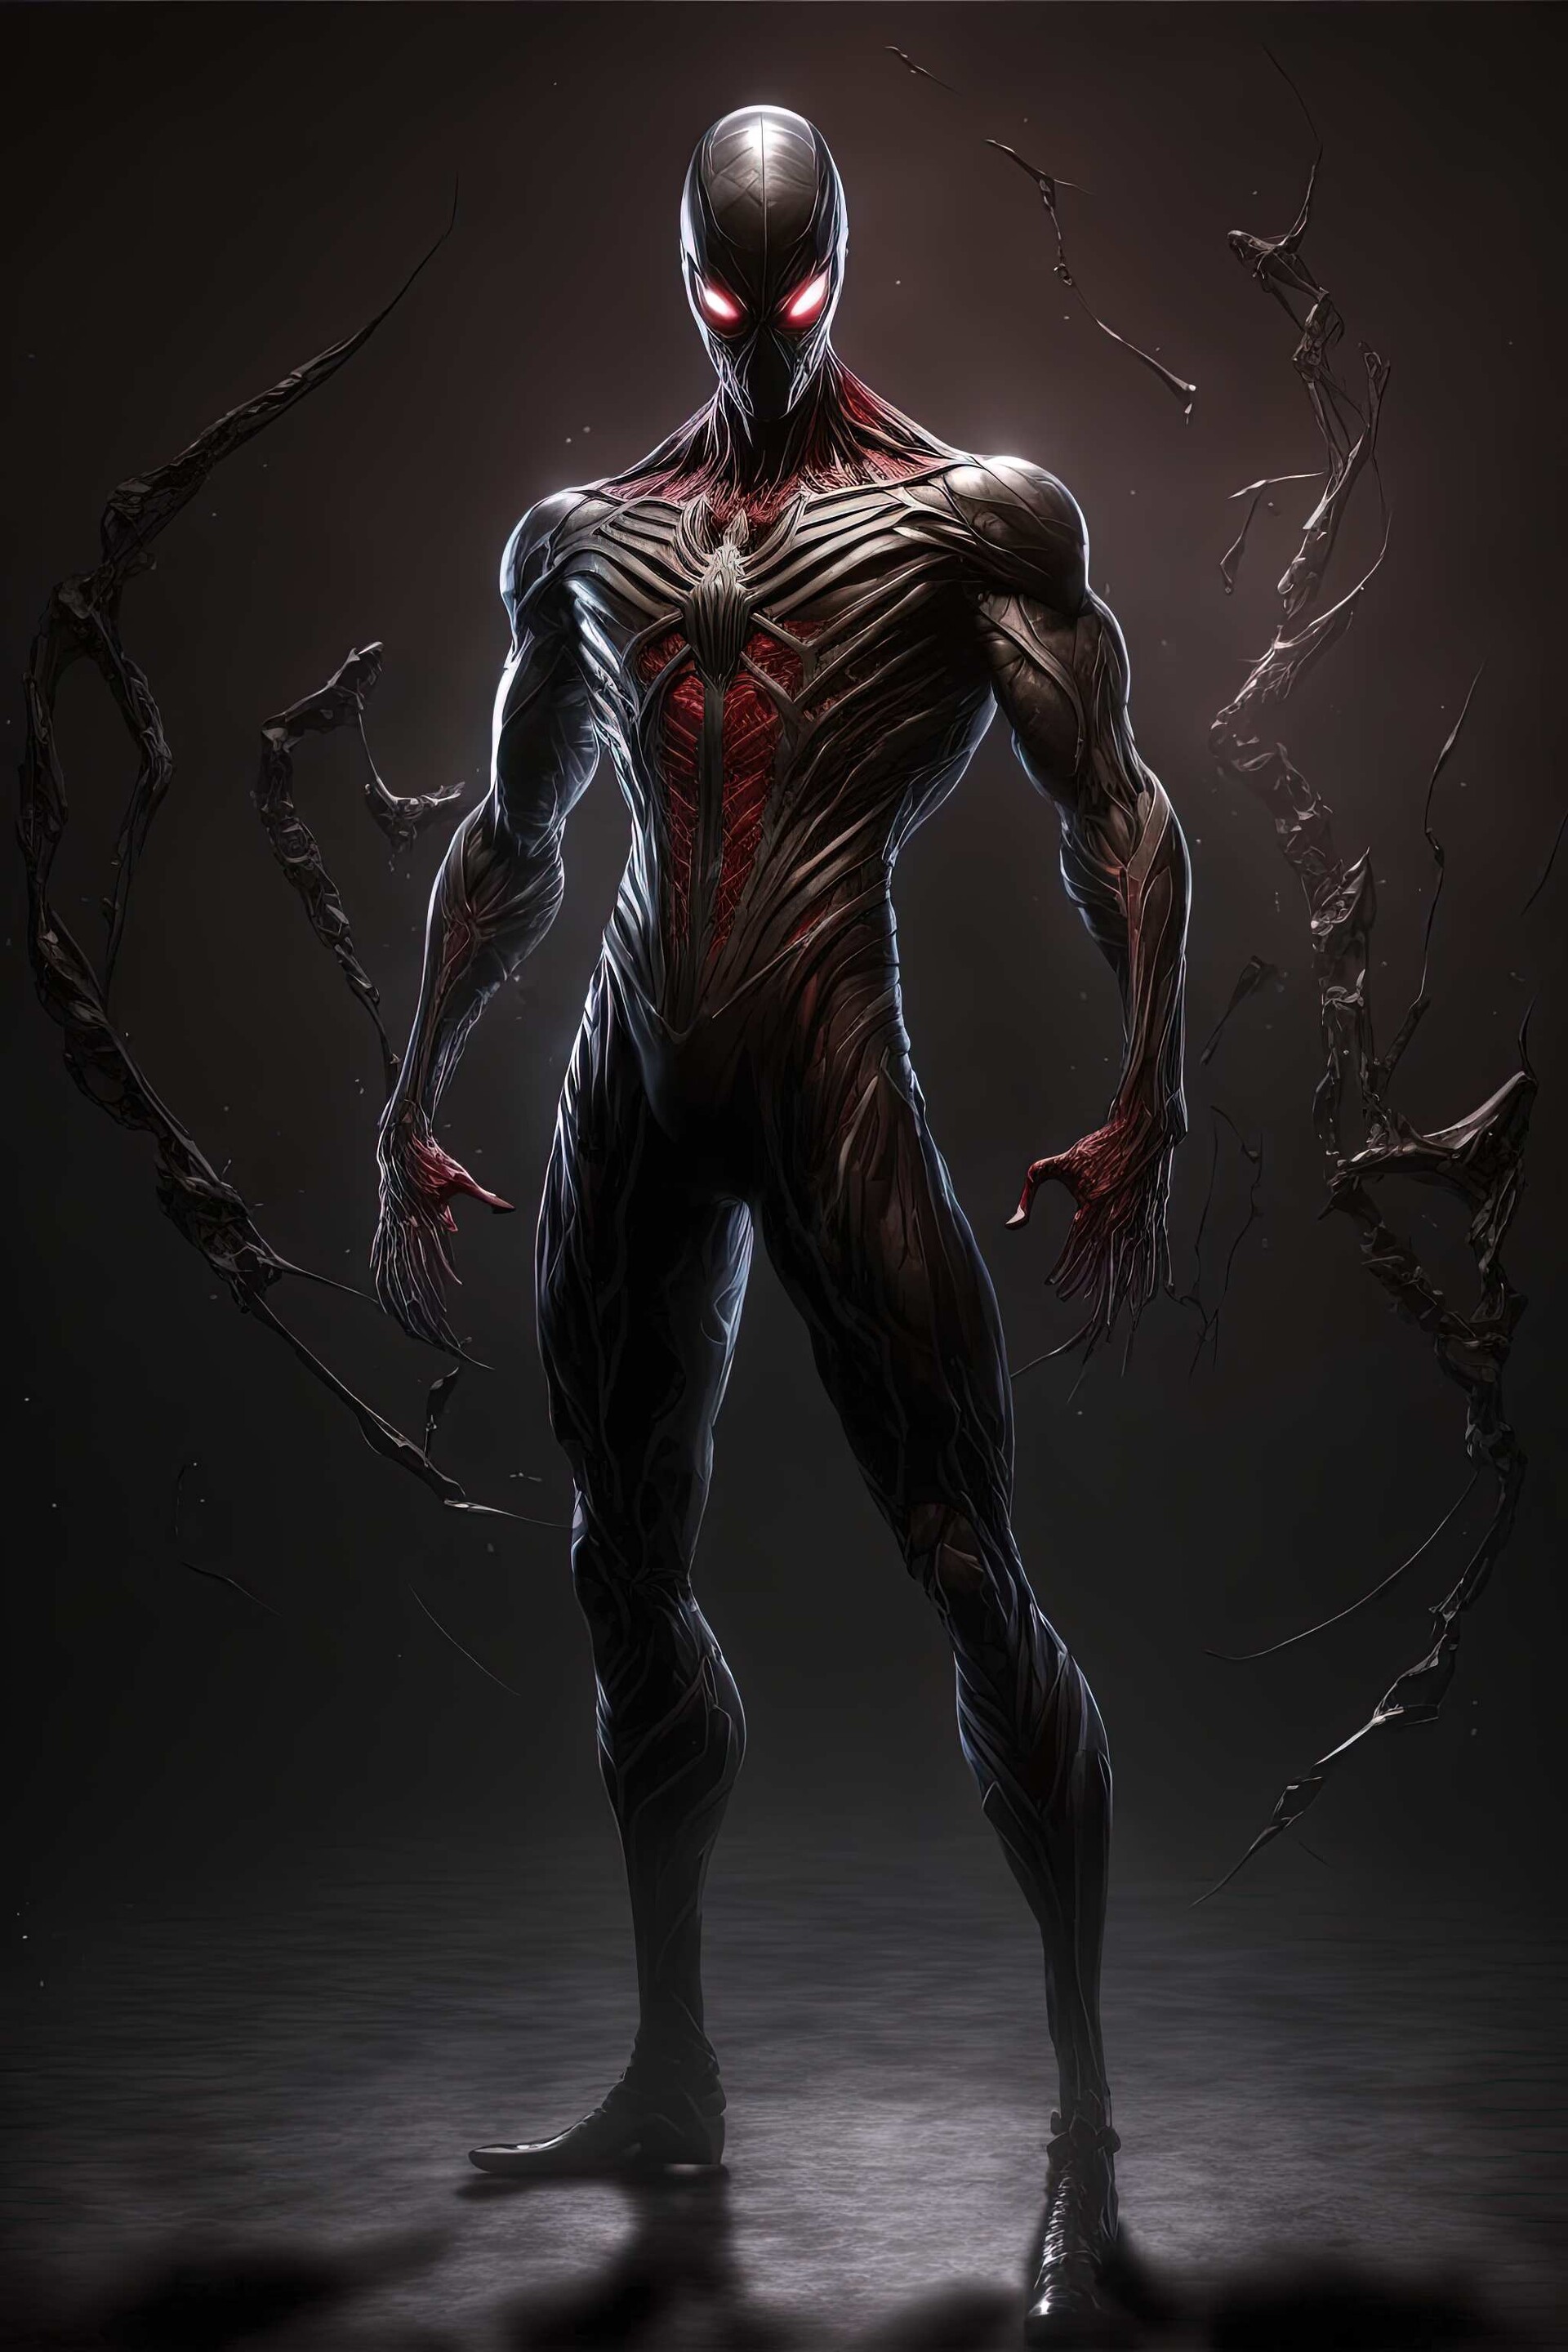 ArtStation - Dark Spiderman concept 3.